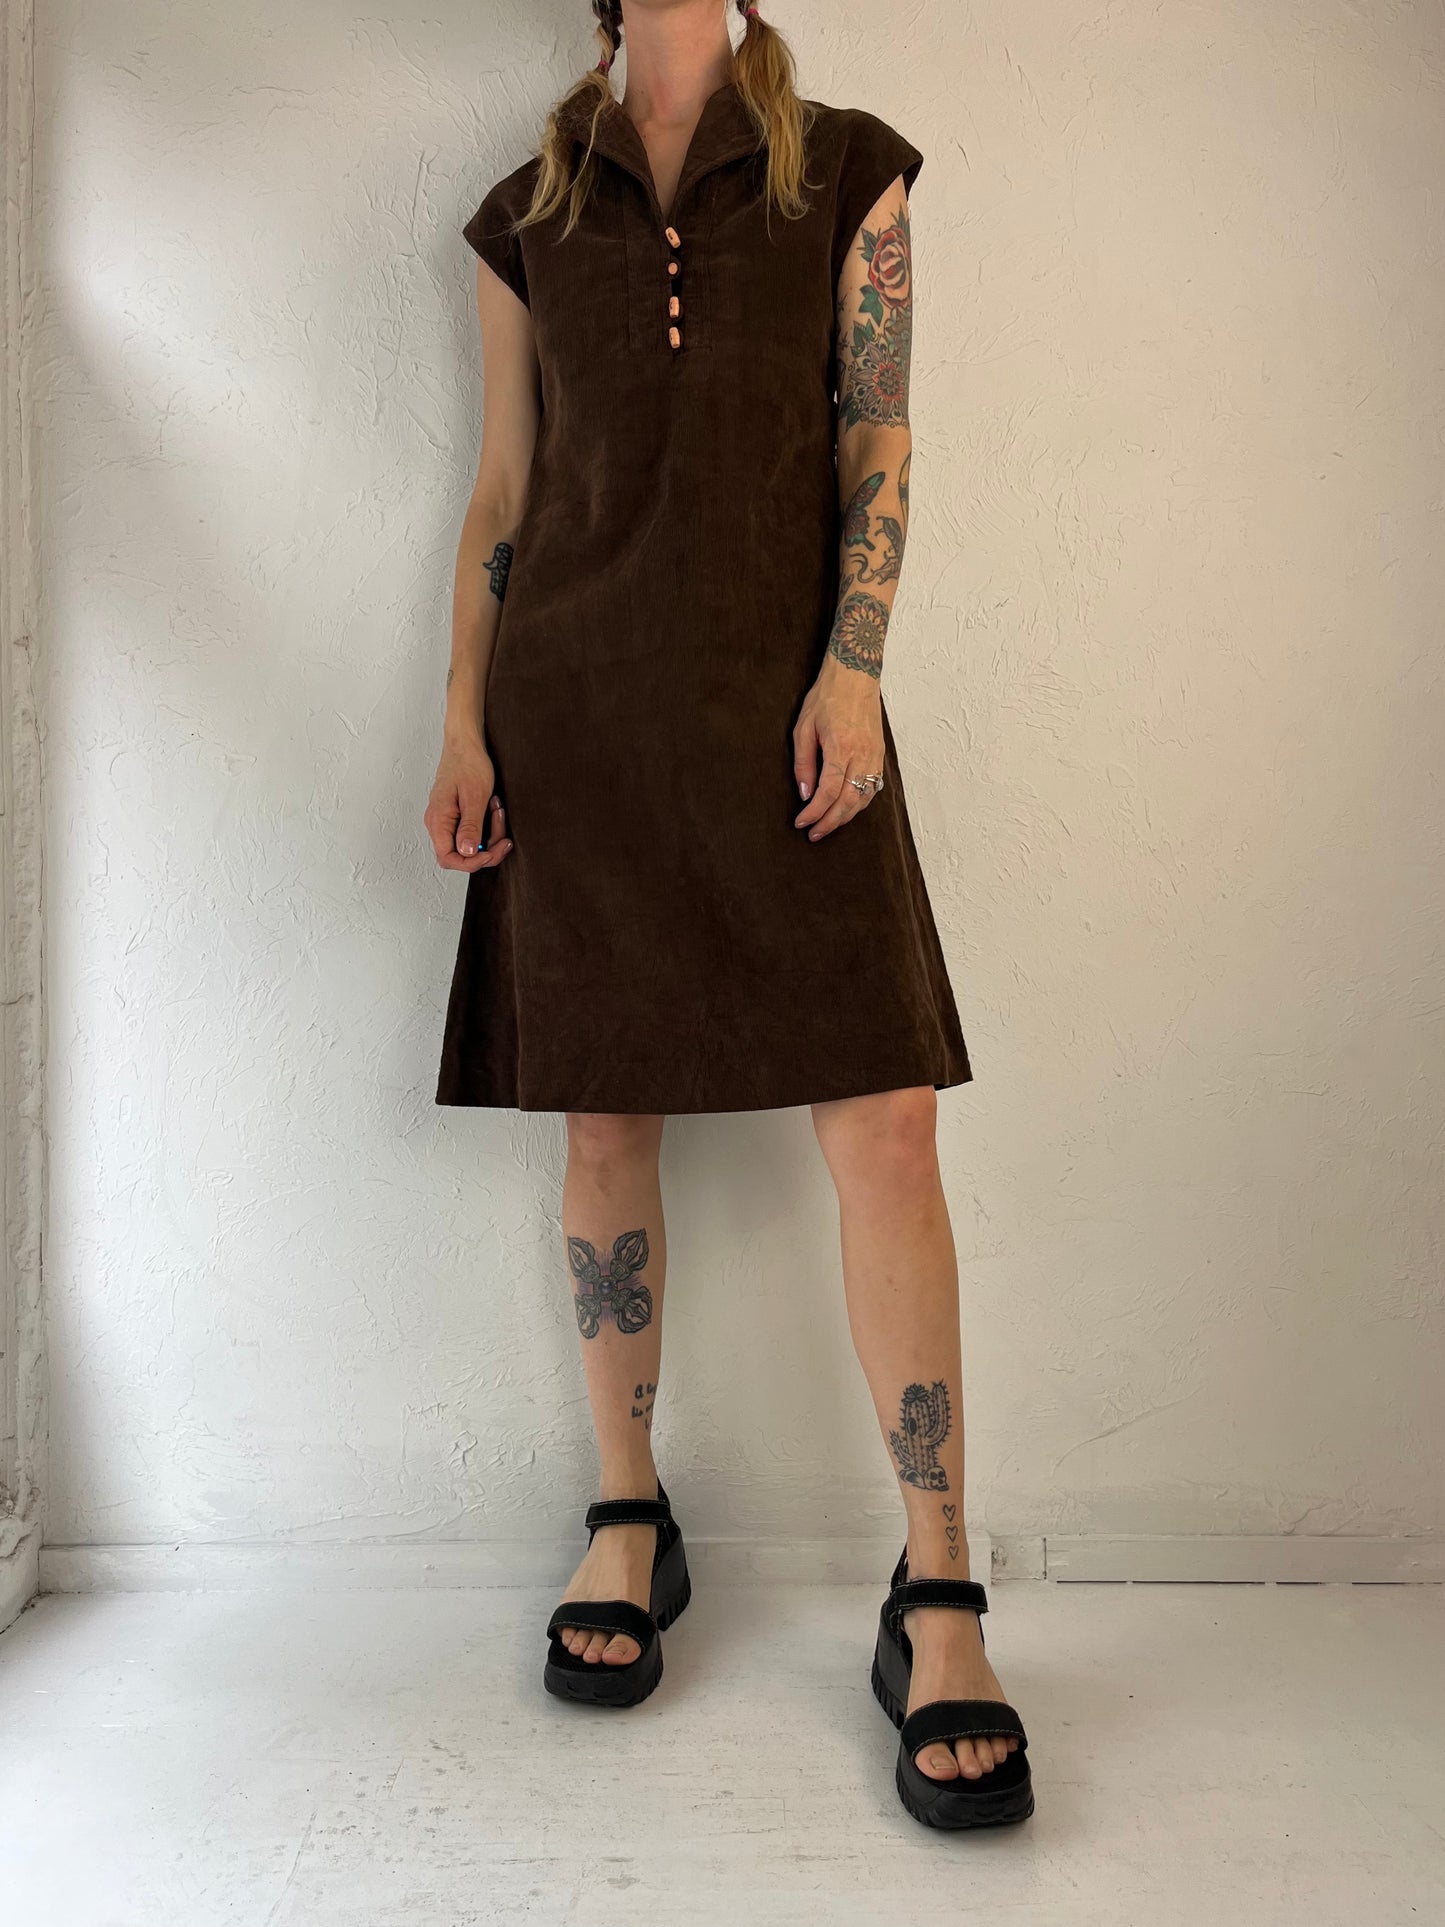 90s Brown Corduroy Sleeveless Dress / Small - Medium